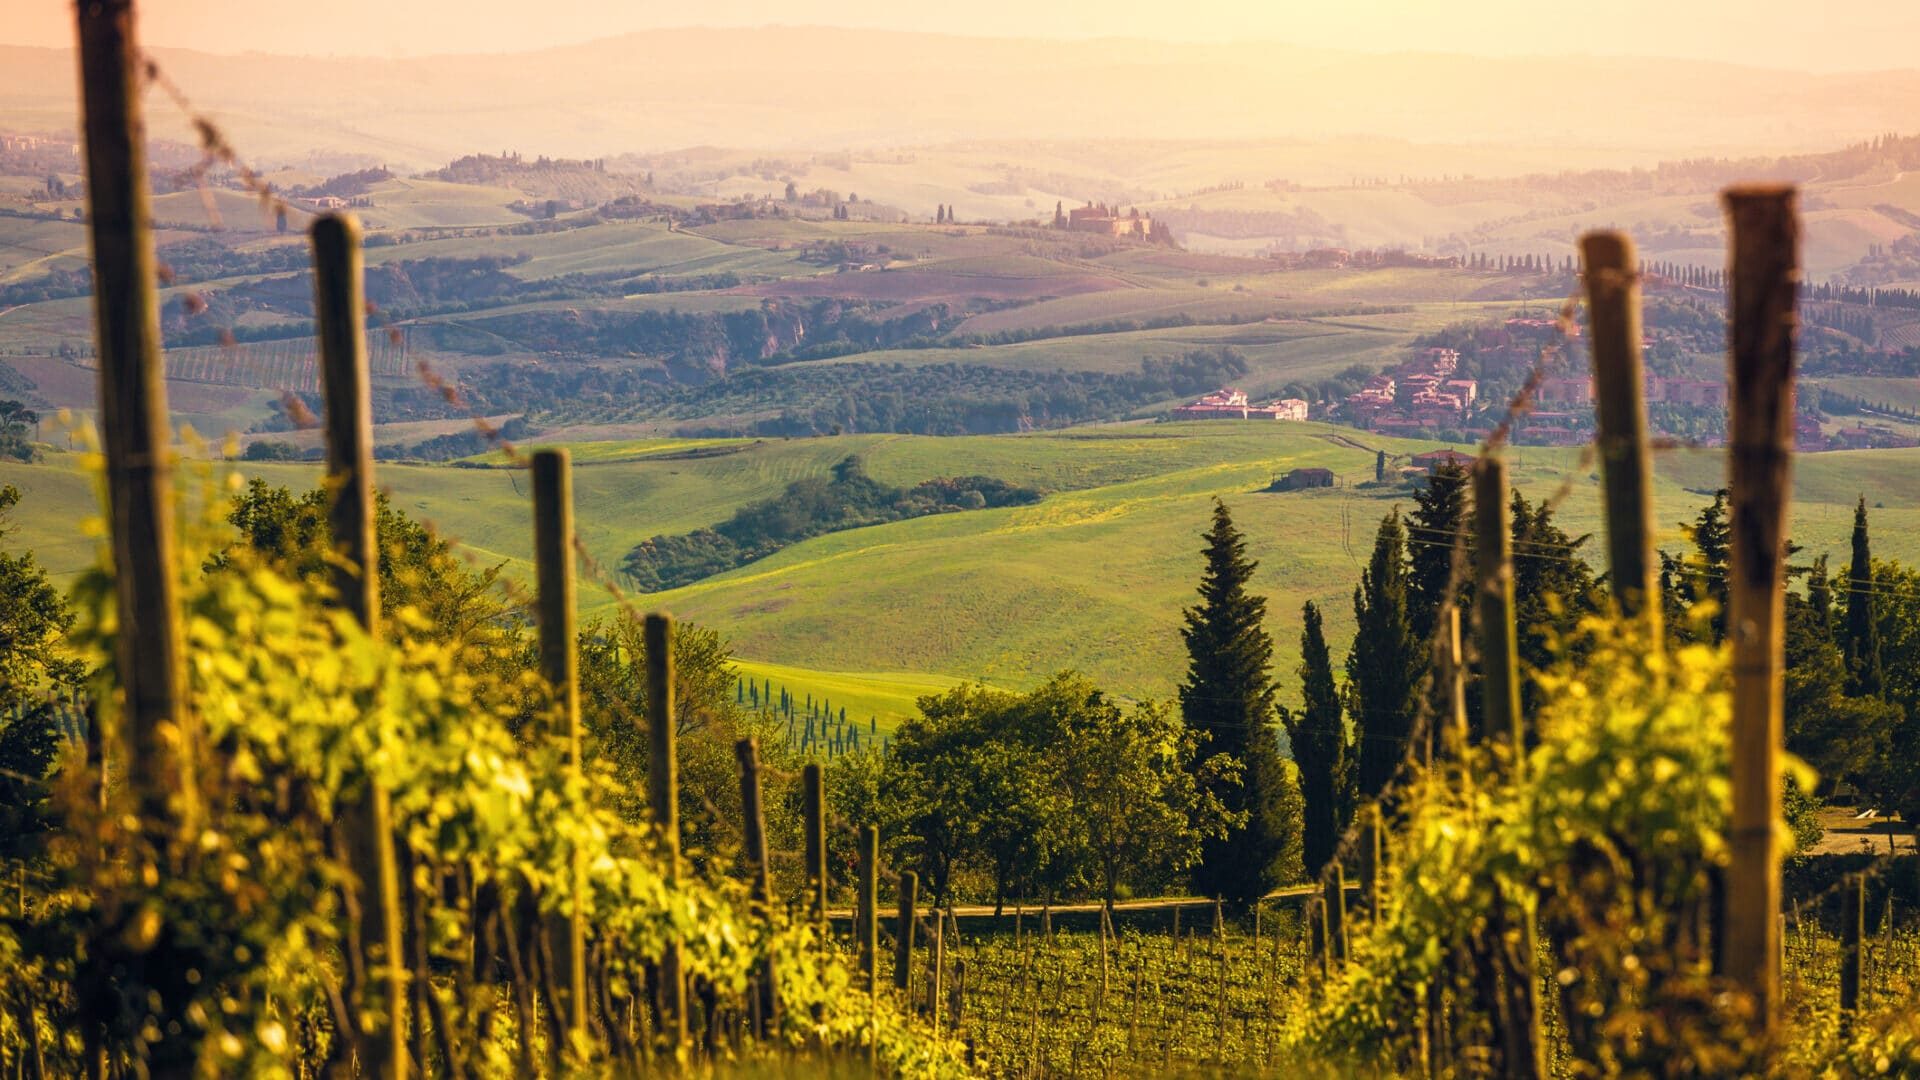 Vineyards in Italy at Sunset, Chianti Region